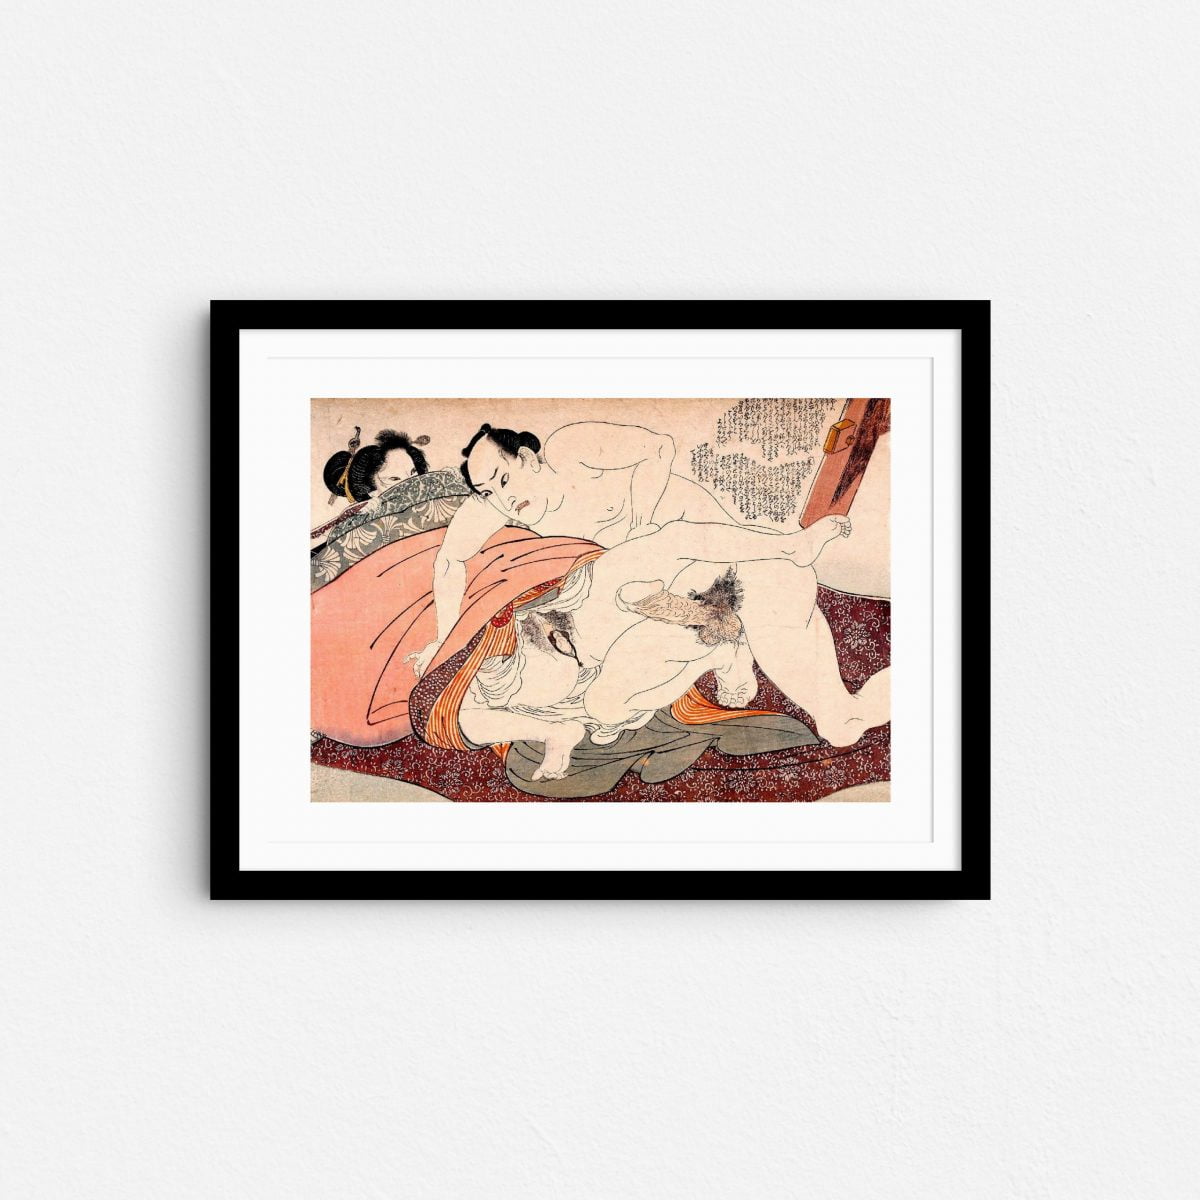 sheets-of-submission-shunga-japanese-erotica-art-prints-frame